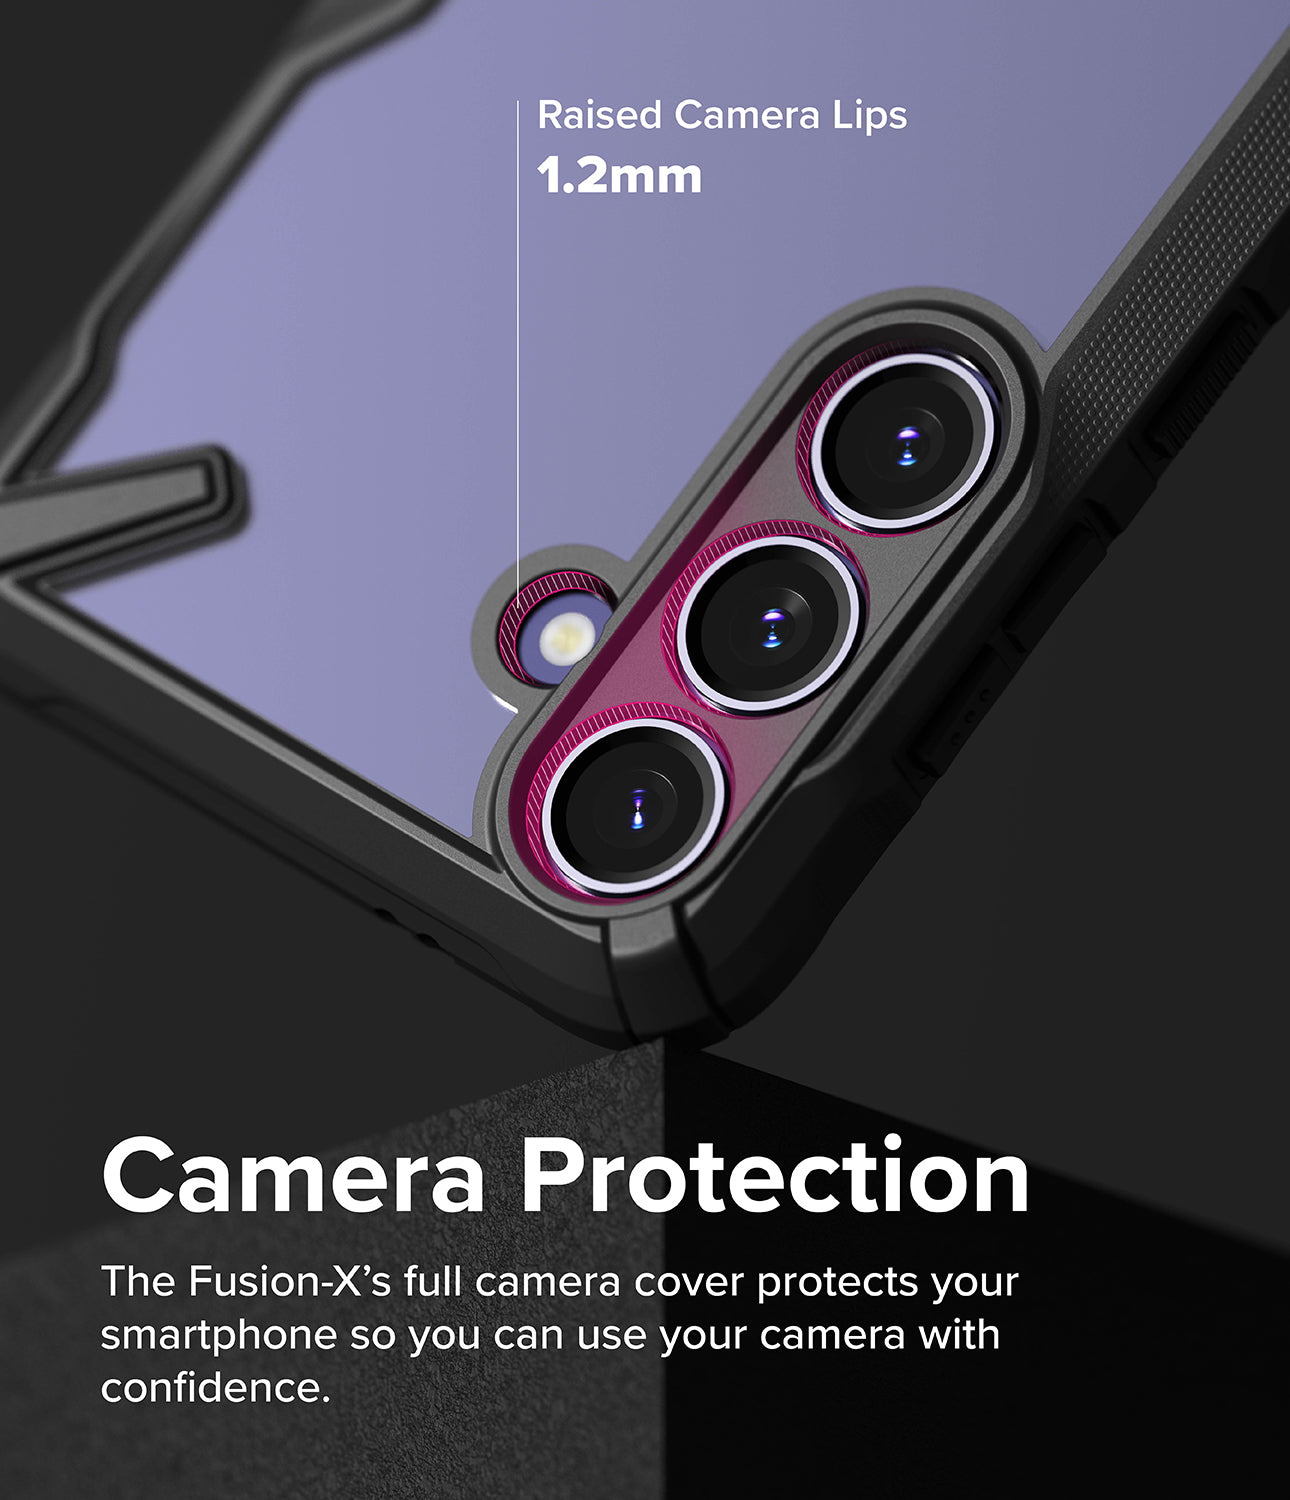 Samsung Galaxy S24 Plus Case Cover | Fusion X Series |Black